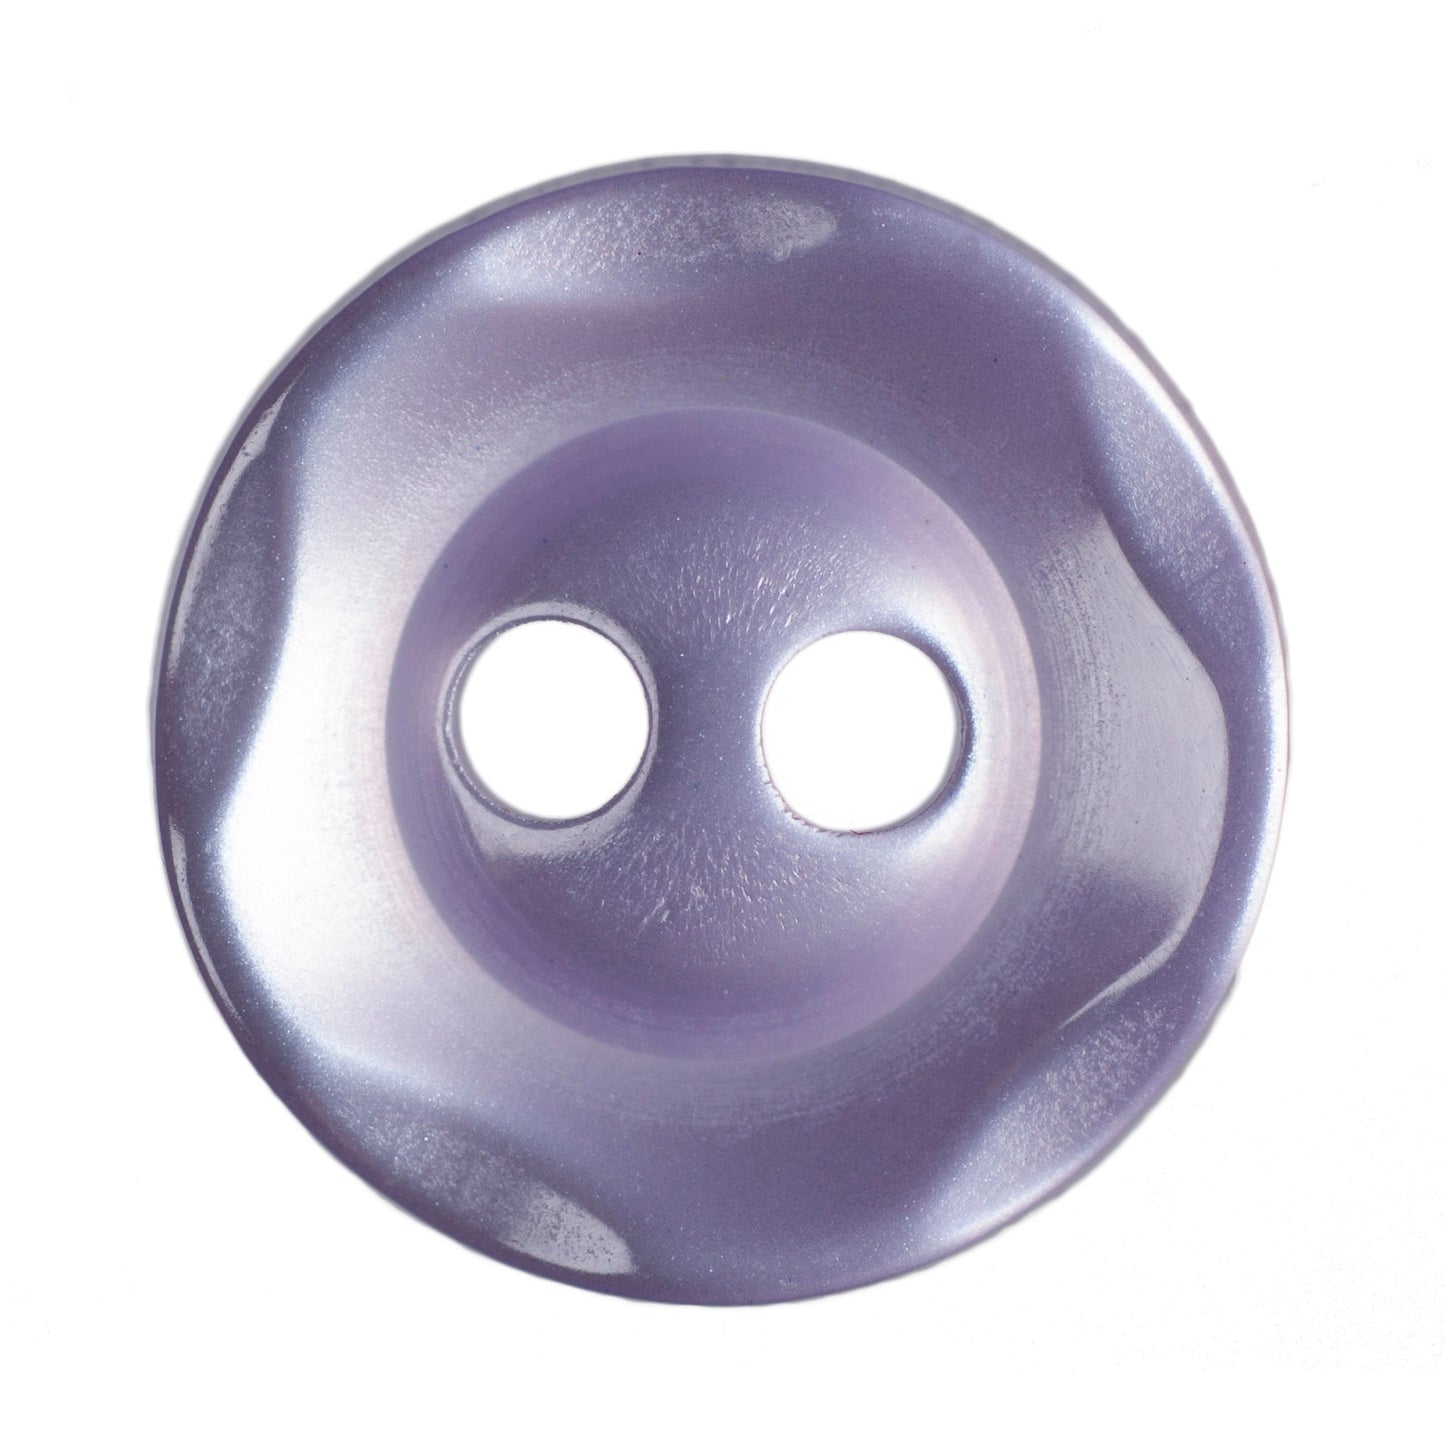 Scalloped Edge Button - Lilac 11mm